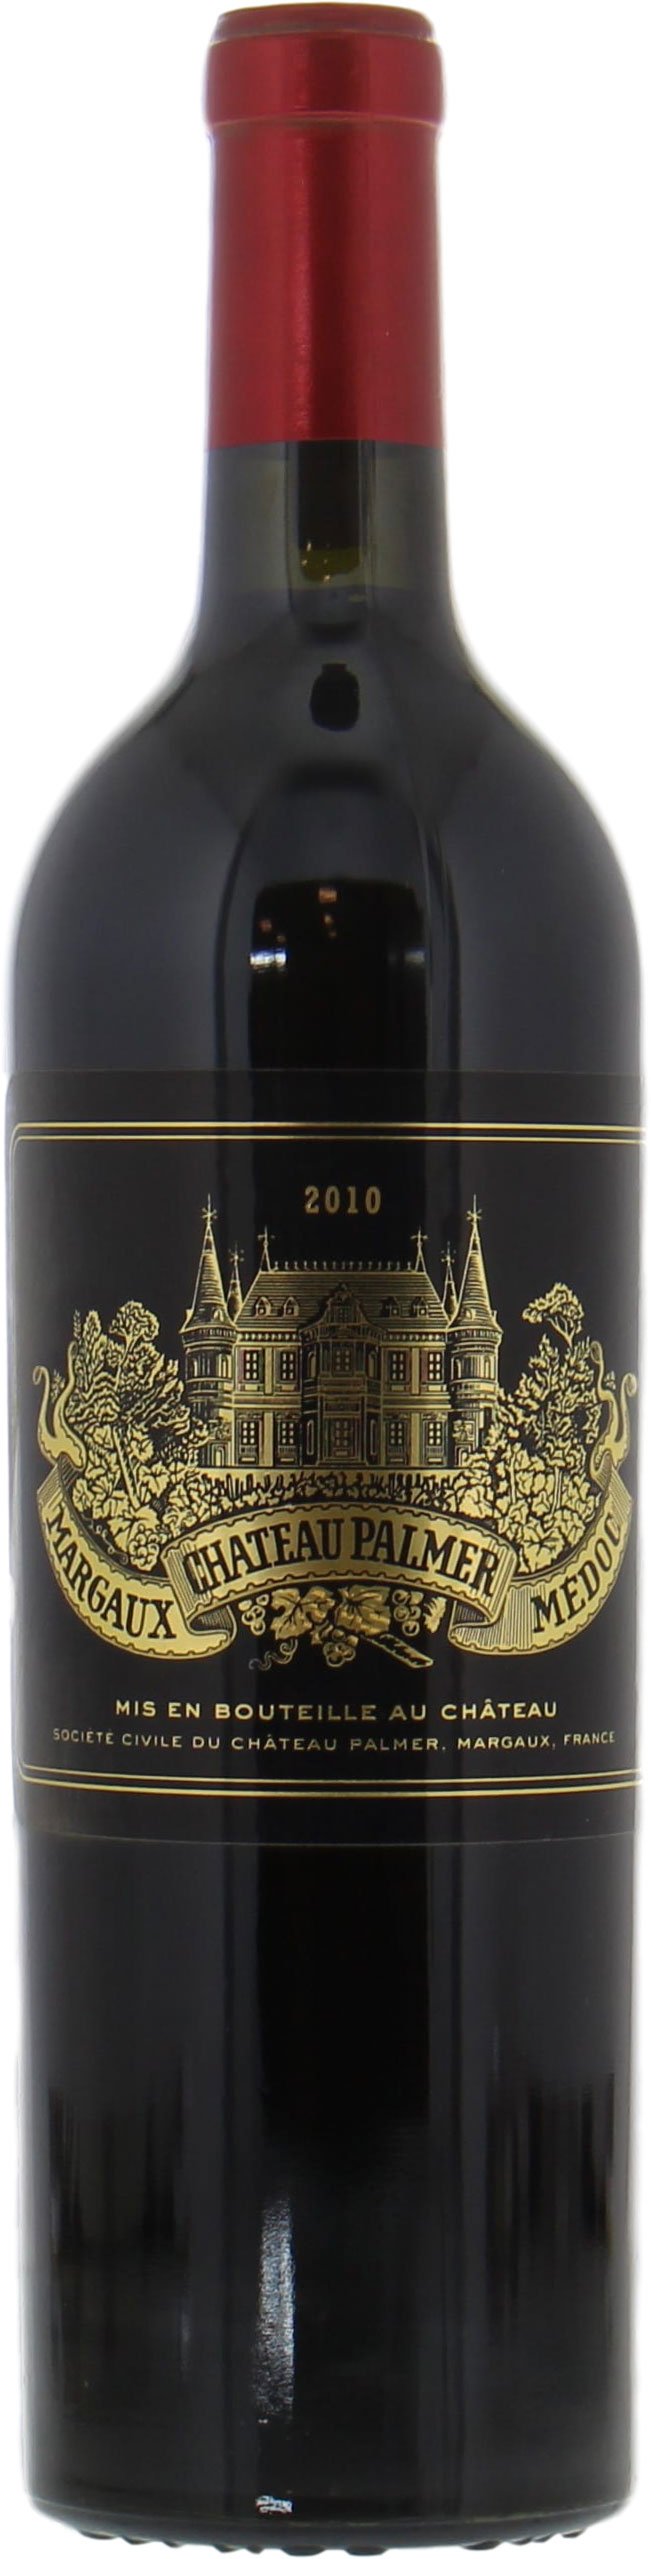 Chateau Palmer - Chateau Palmer 2010